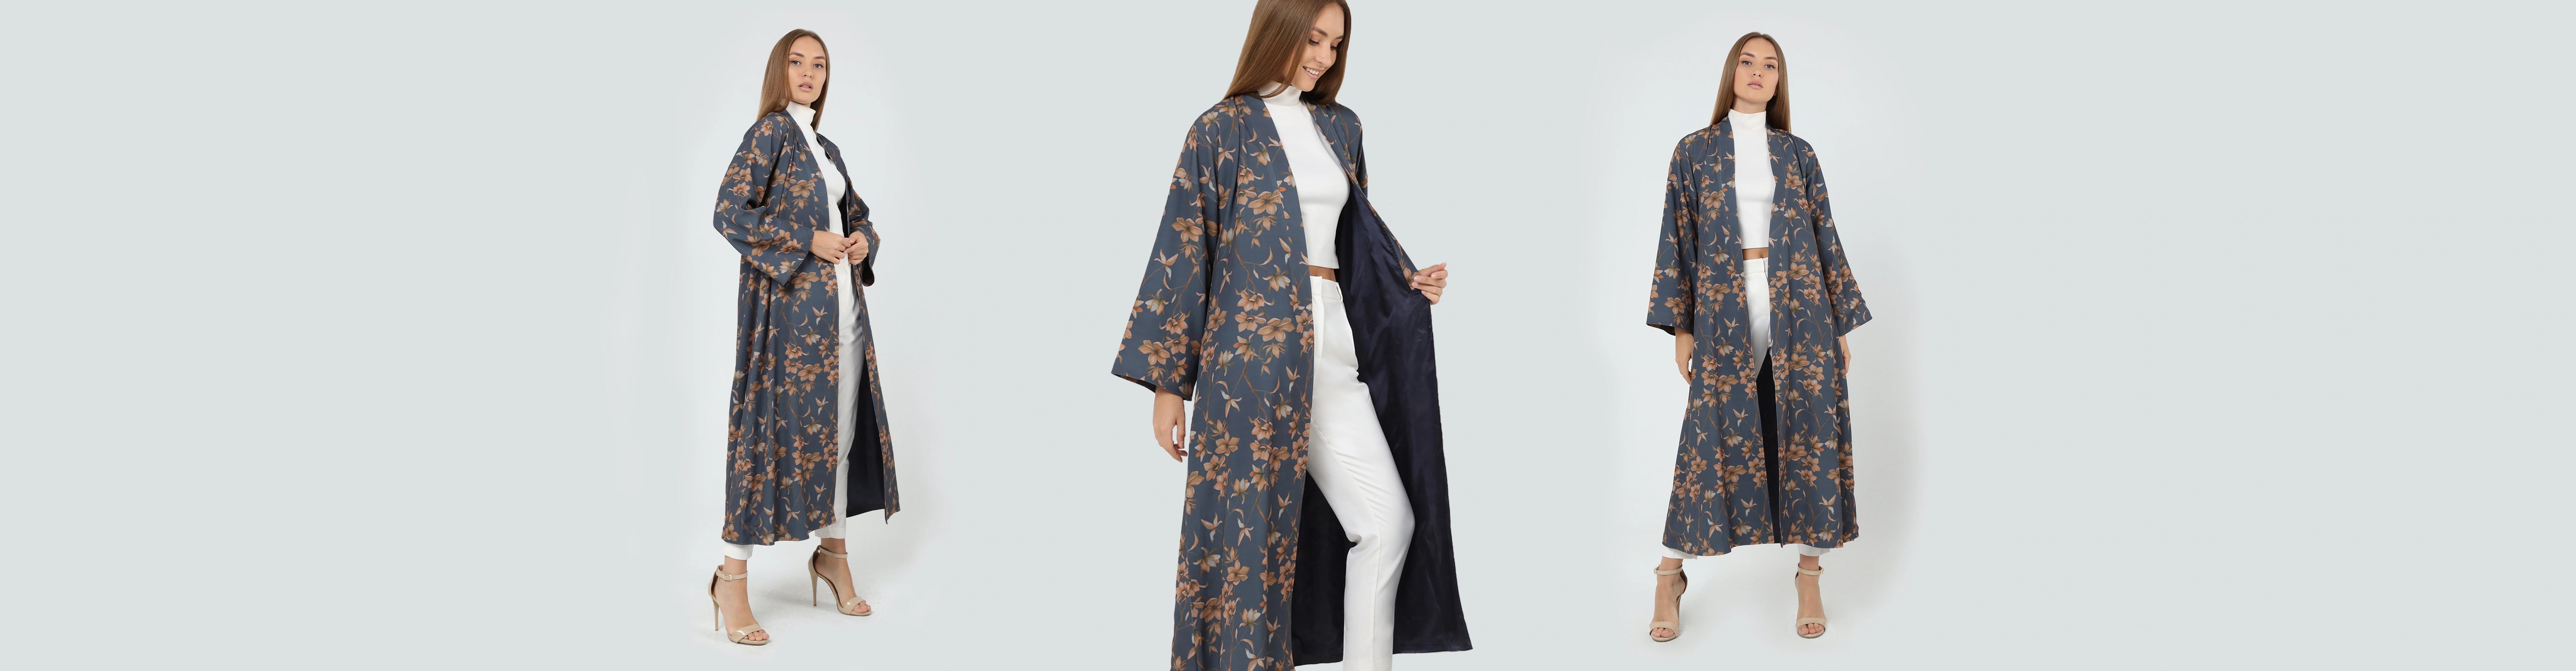 Kimono Outfits